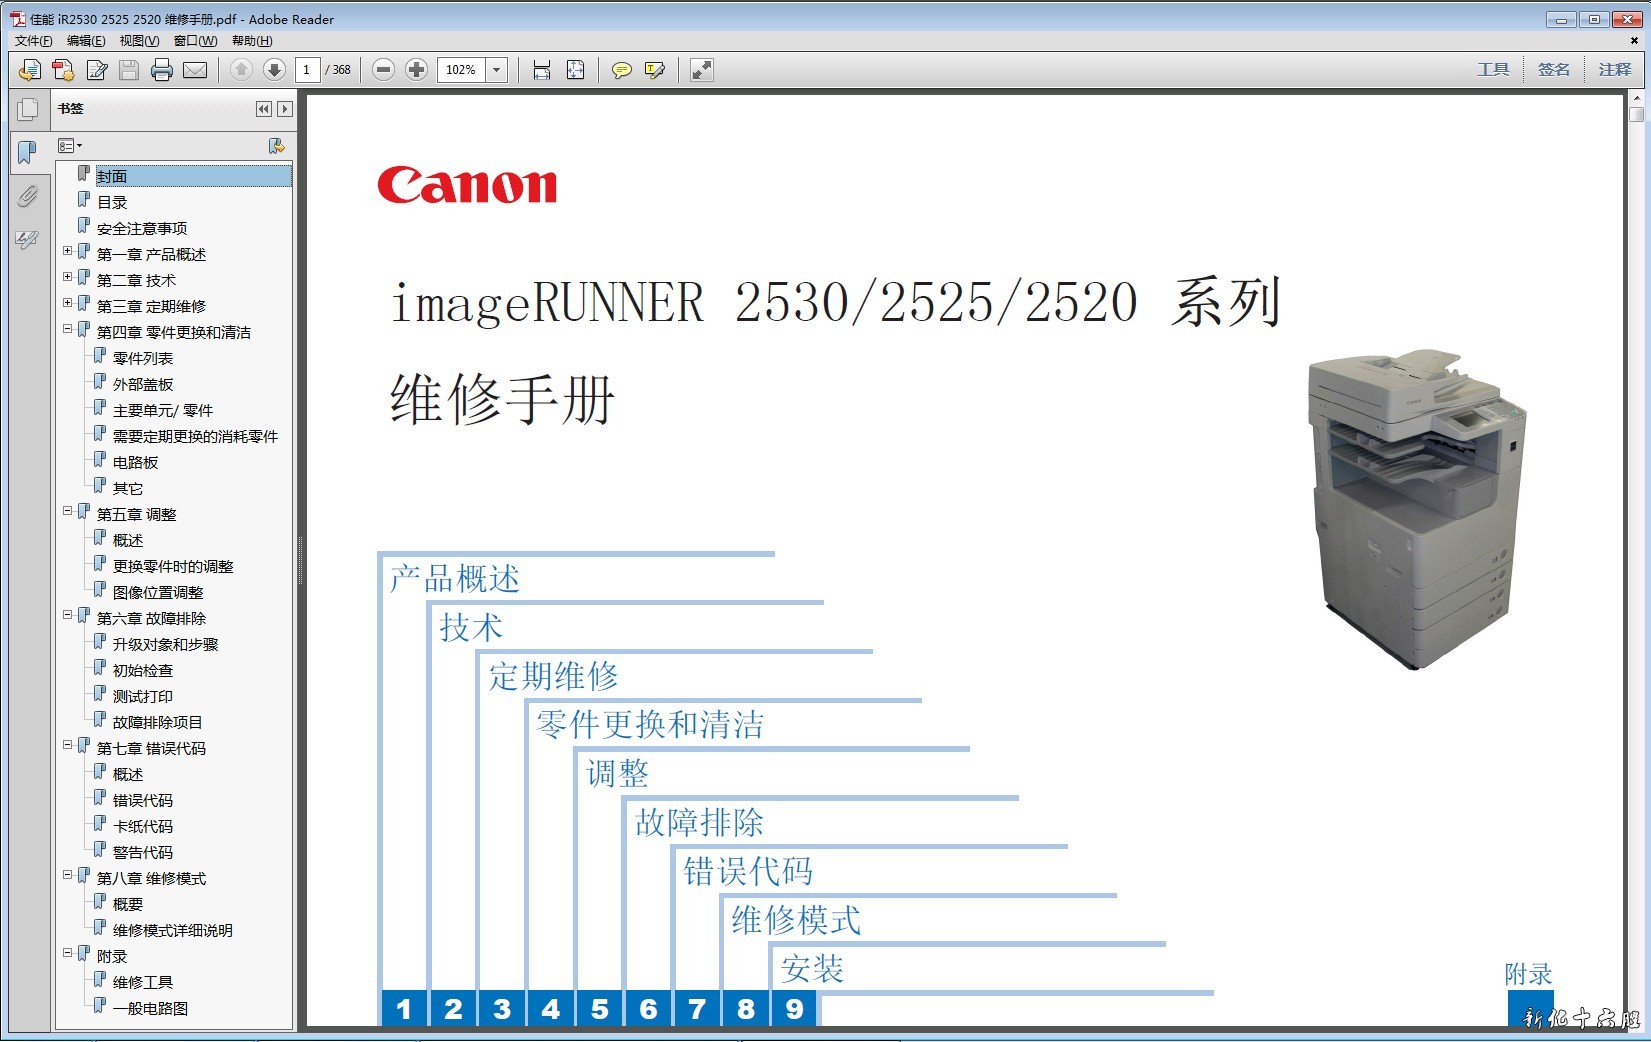 佳能 imageRUNNER iR 2530i 2525i 2520i 复印机中文维修手册.jpg